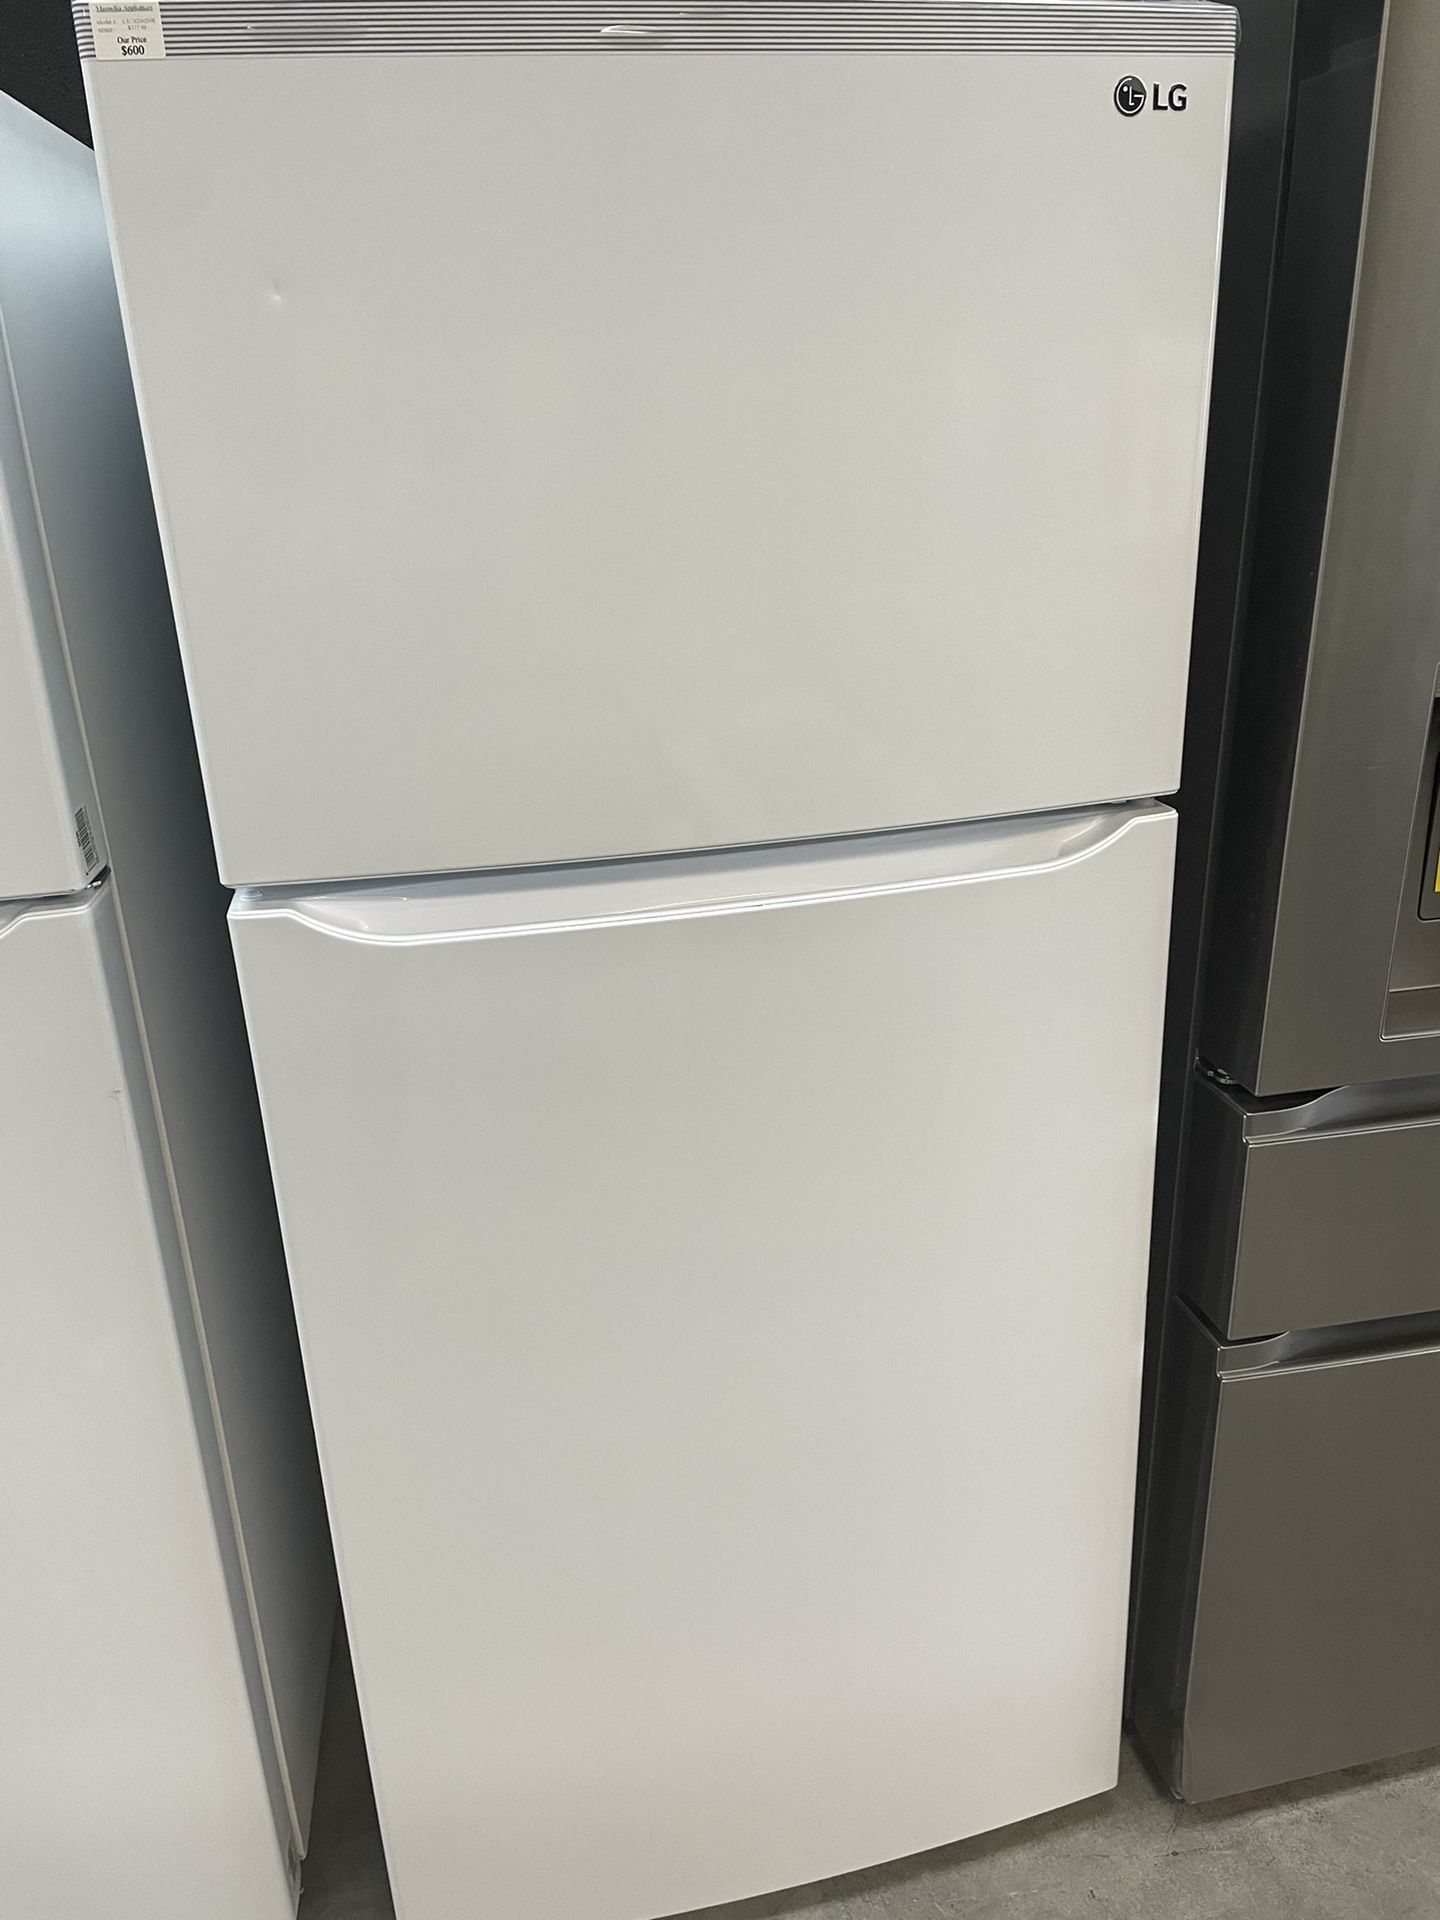 LG Top Freezer Refrigerator 